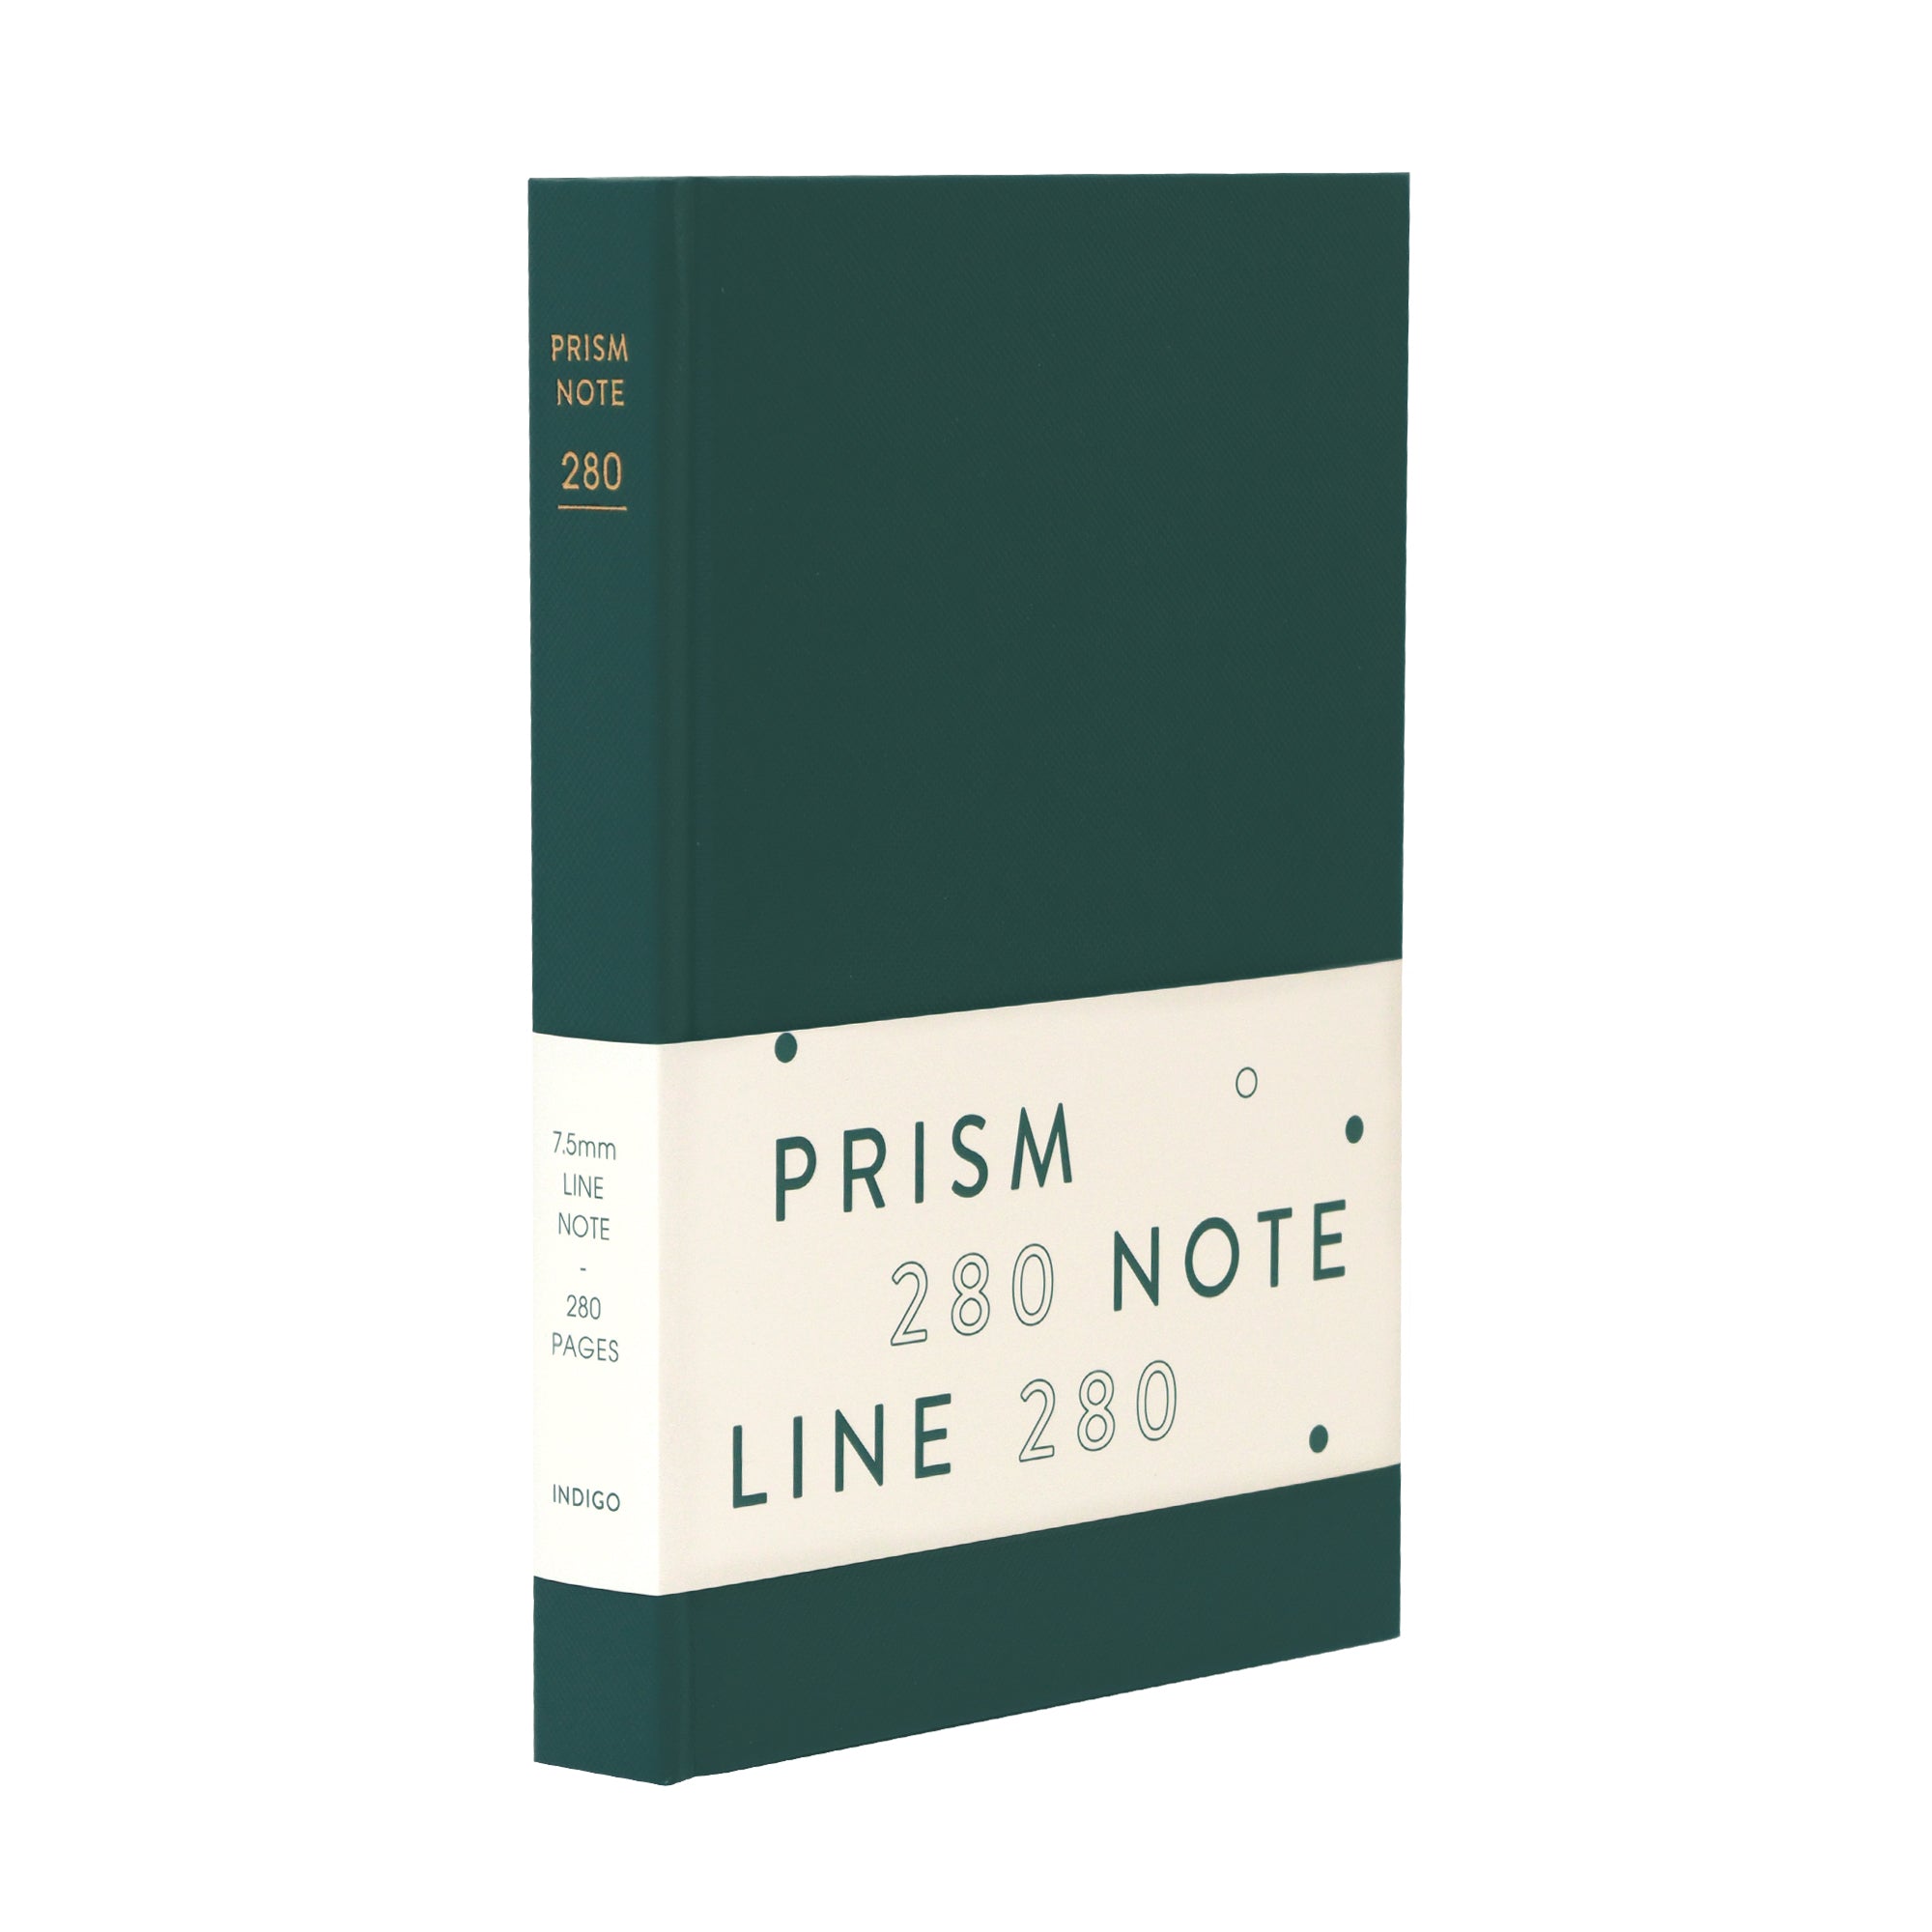 INDIGO Prism 280 line hardcover note (24edition)